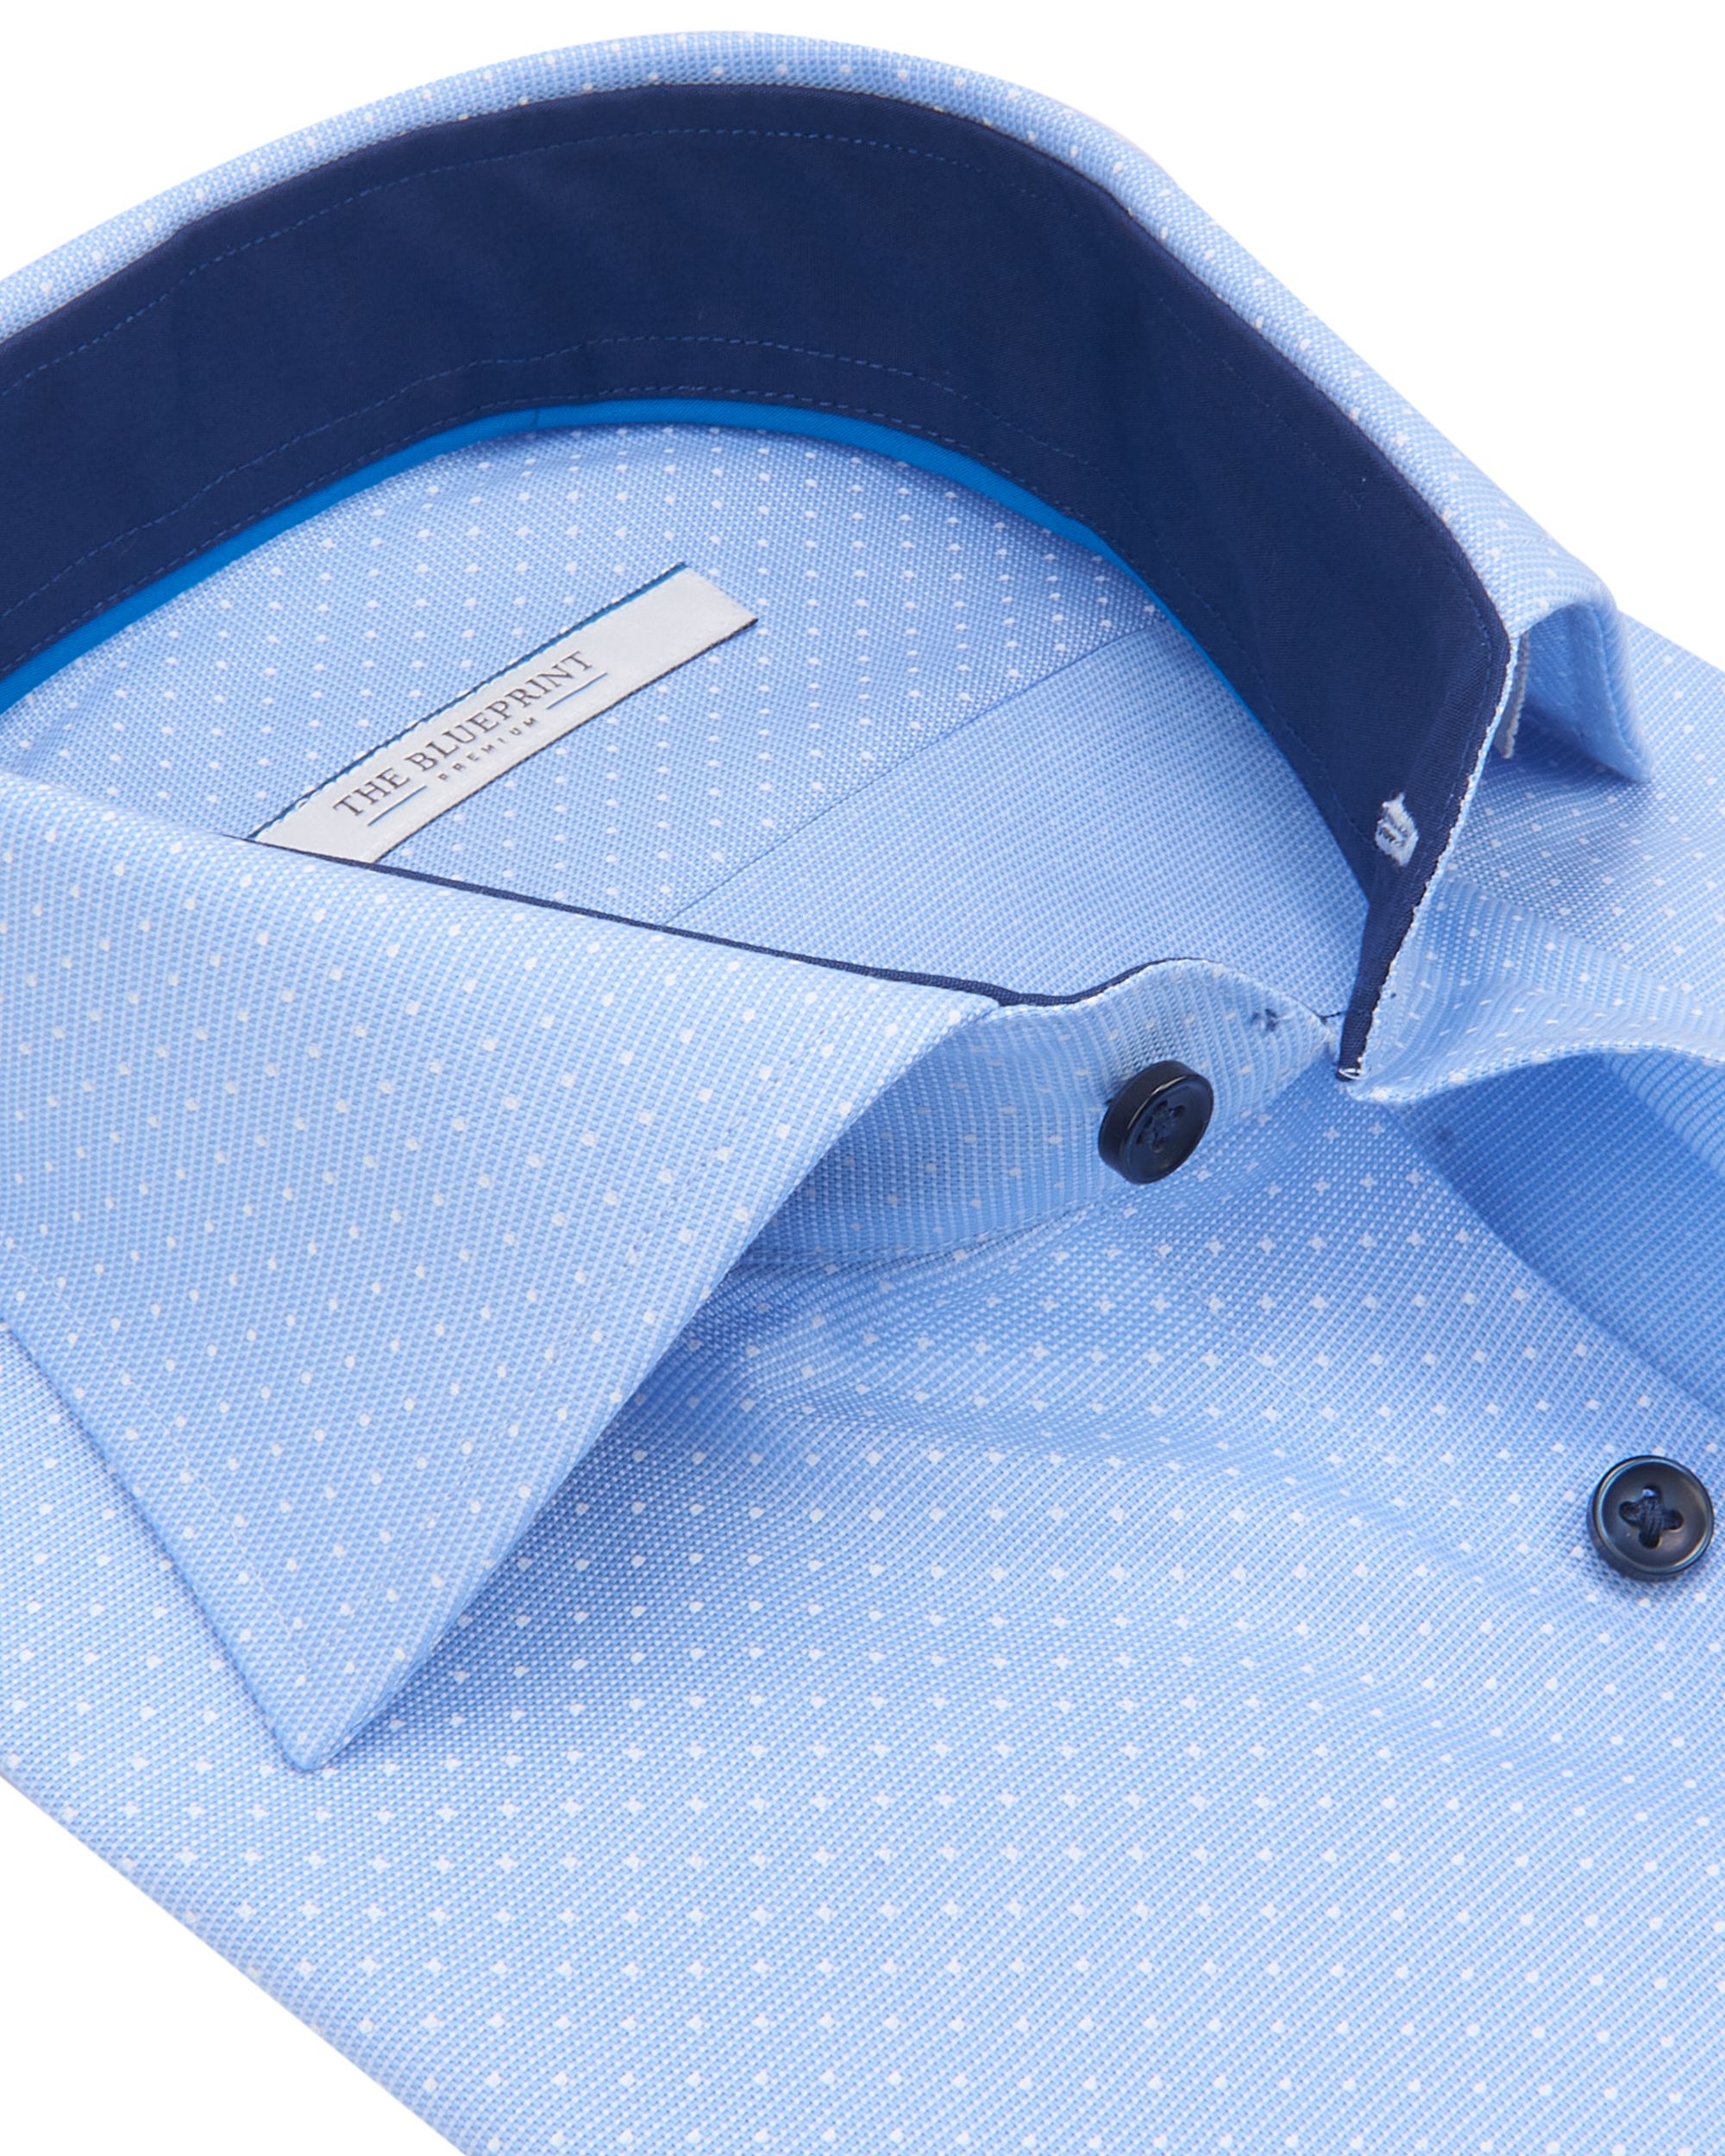 The BLUEPRINT Premium Trendy overhemd LM Blauw stip  078650-001-L